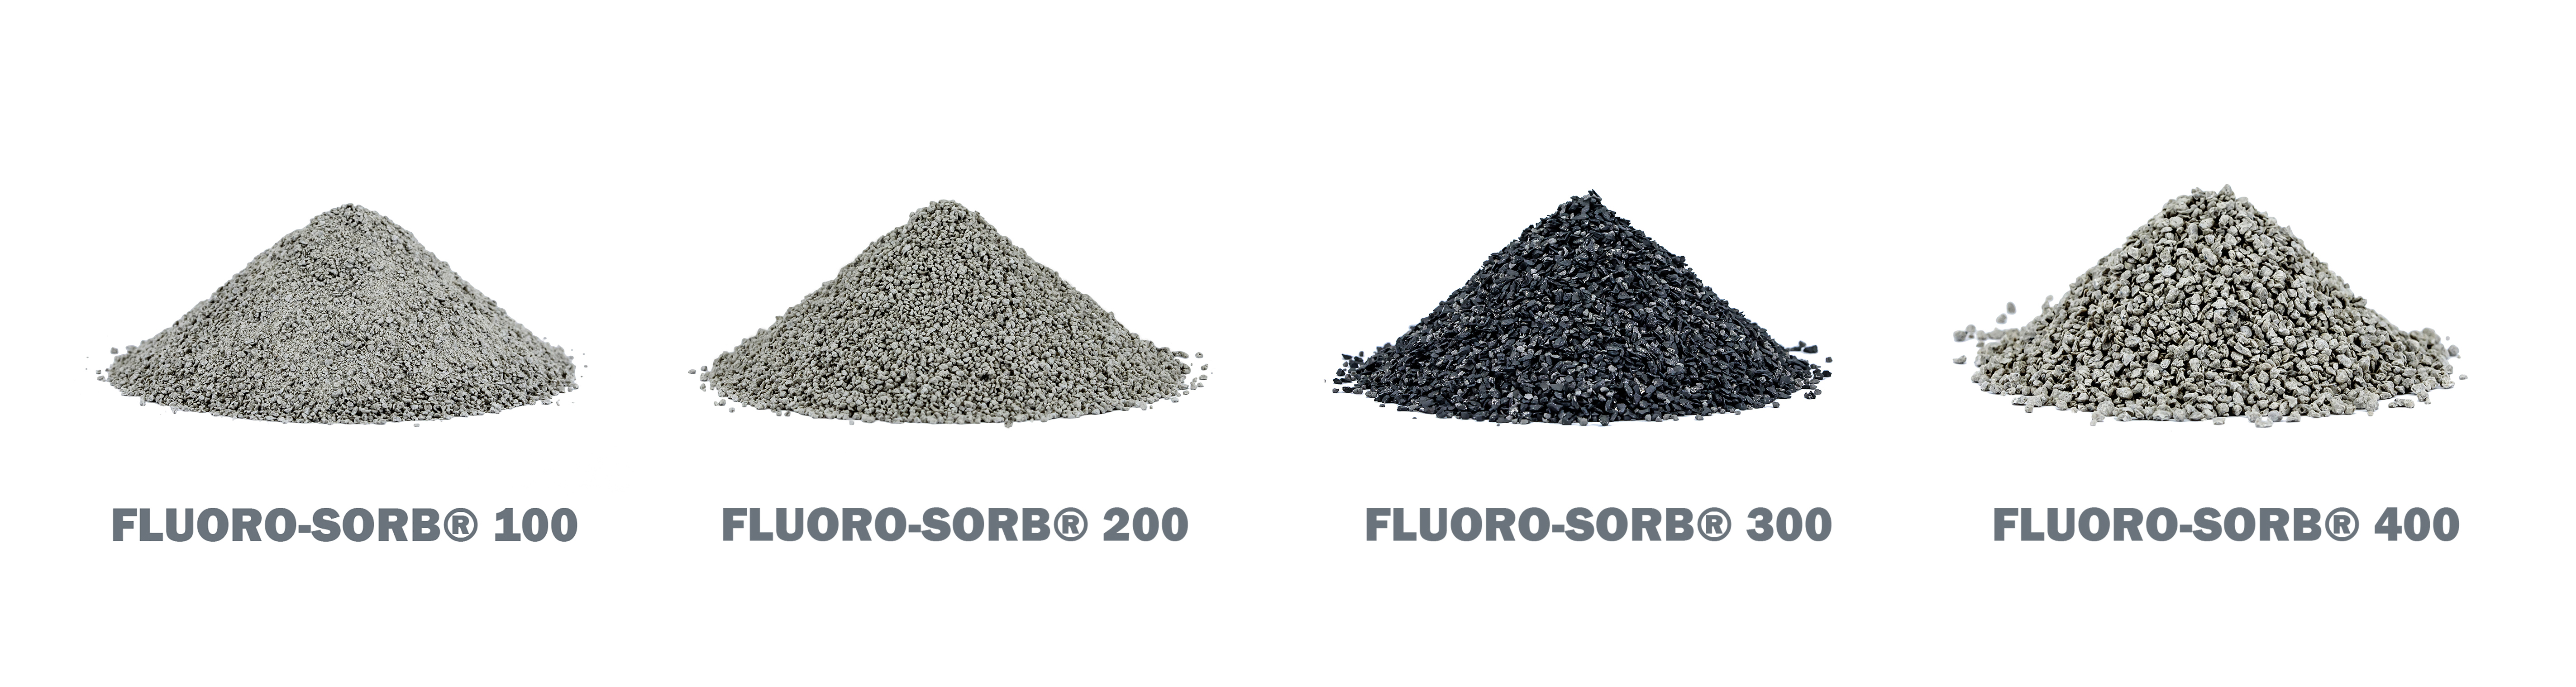 Fluoro-Sorb Variations crop